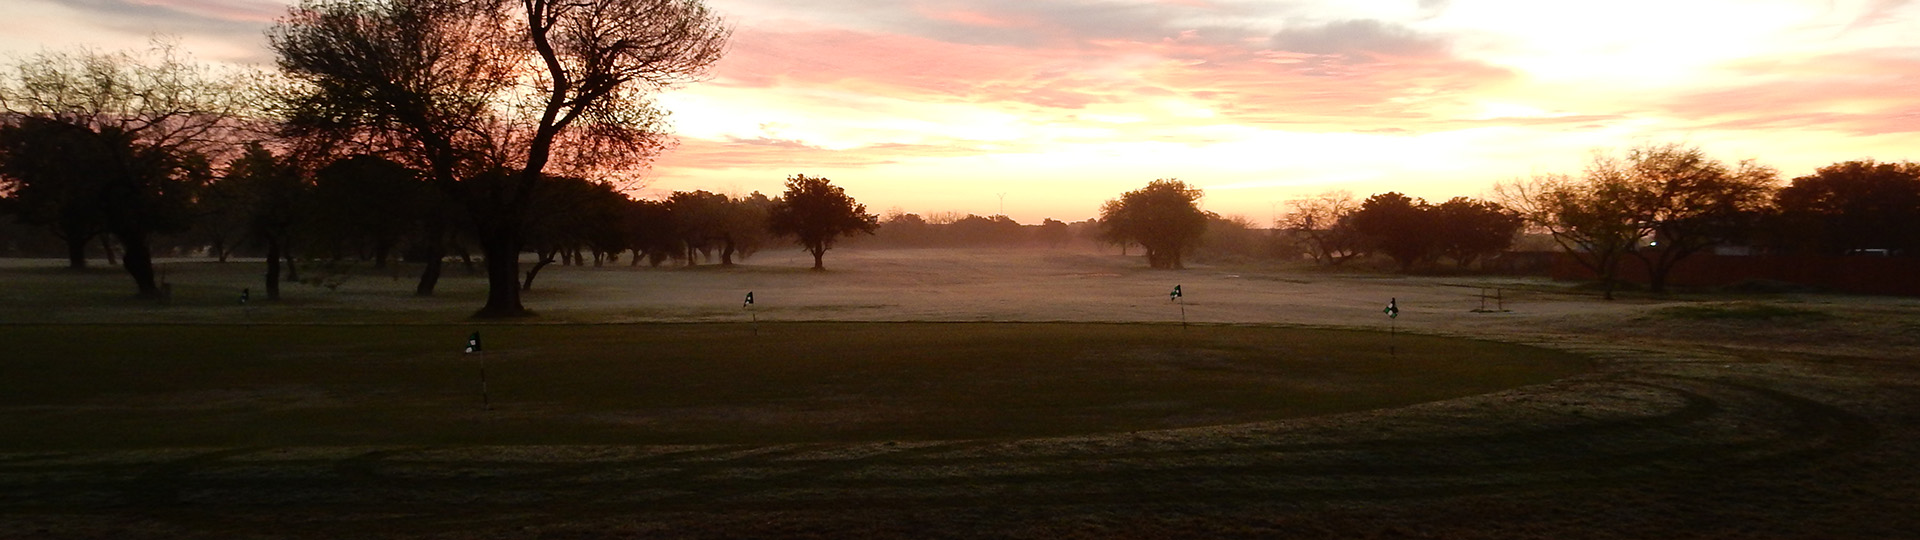 Golf Course at sunrise